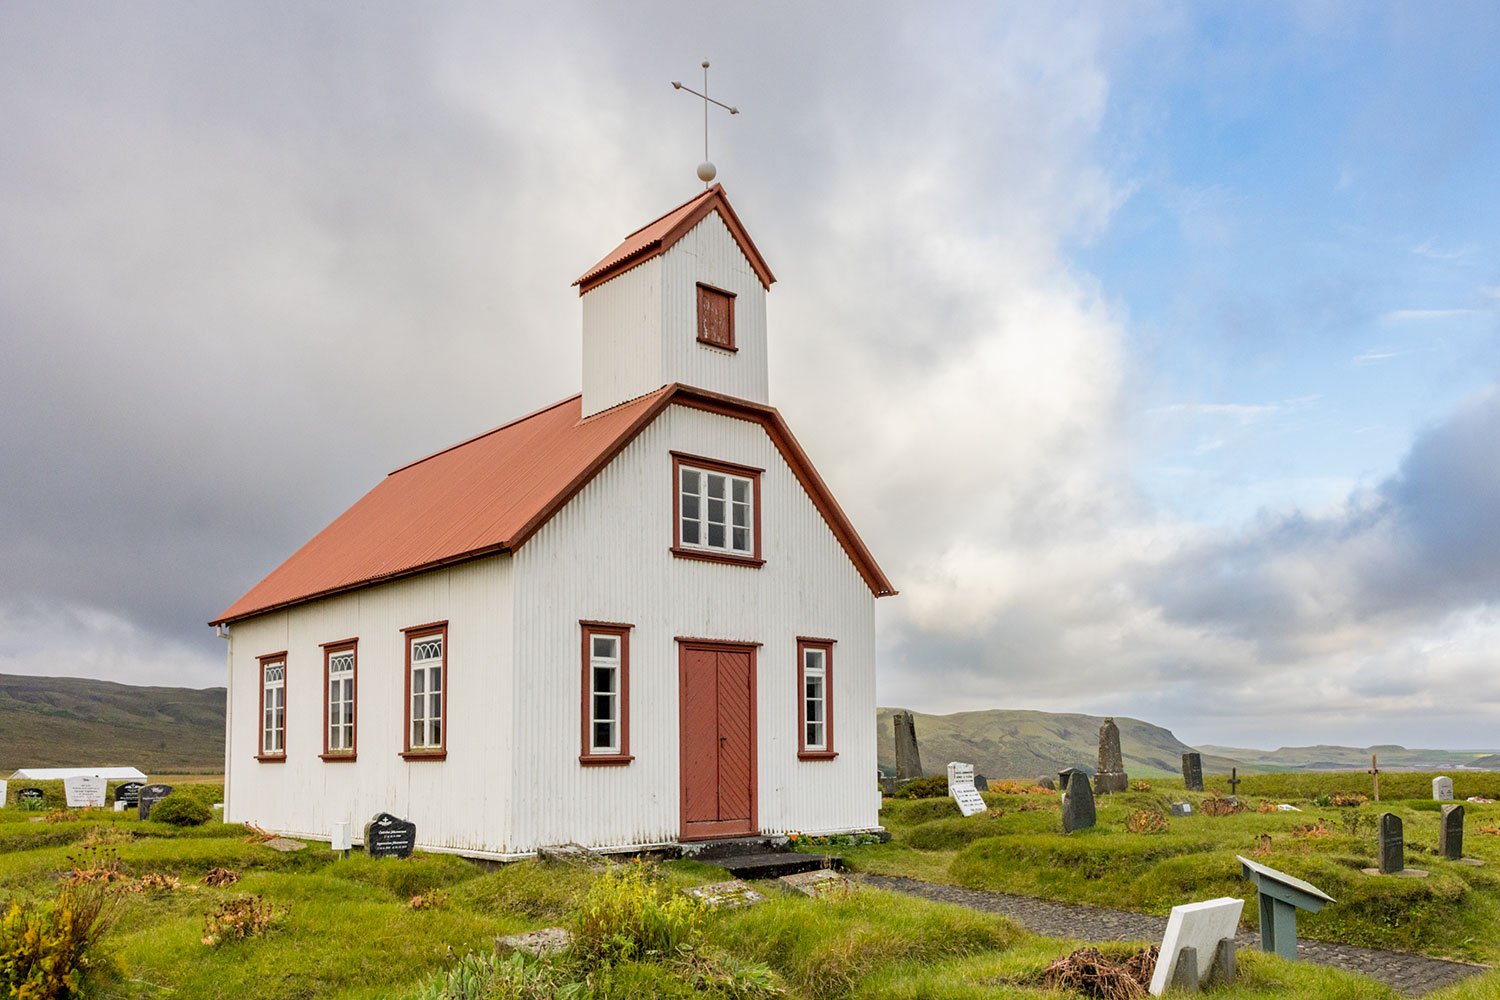 Red Roof Reyniskirkja Church. Western Highlands. Iceland, 2022